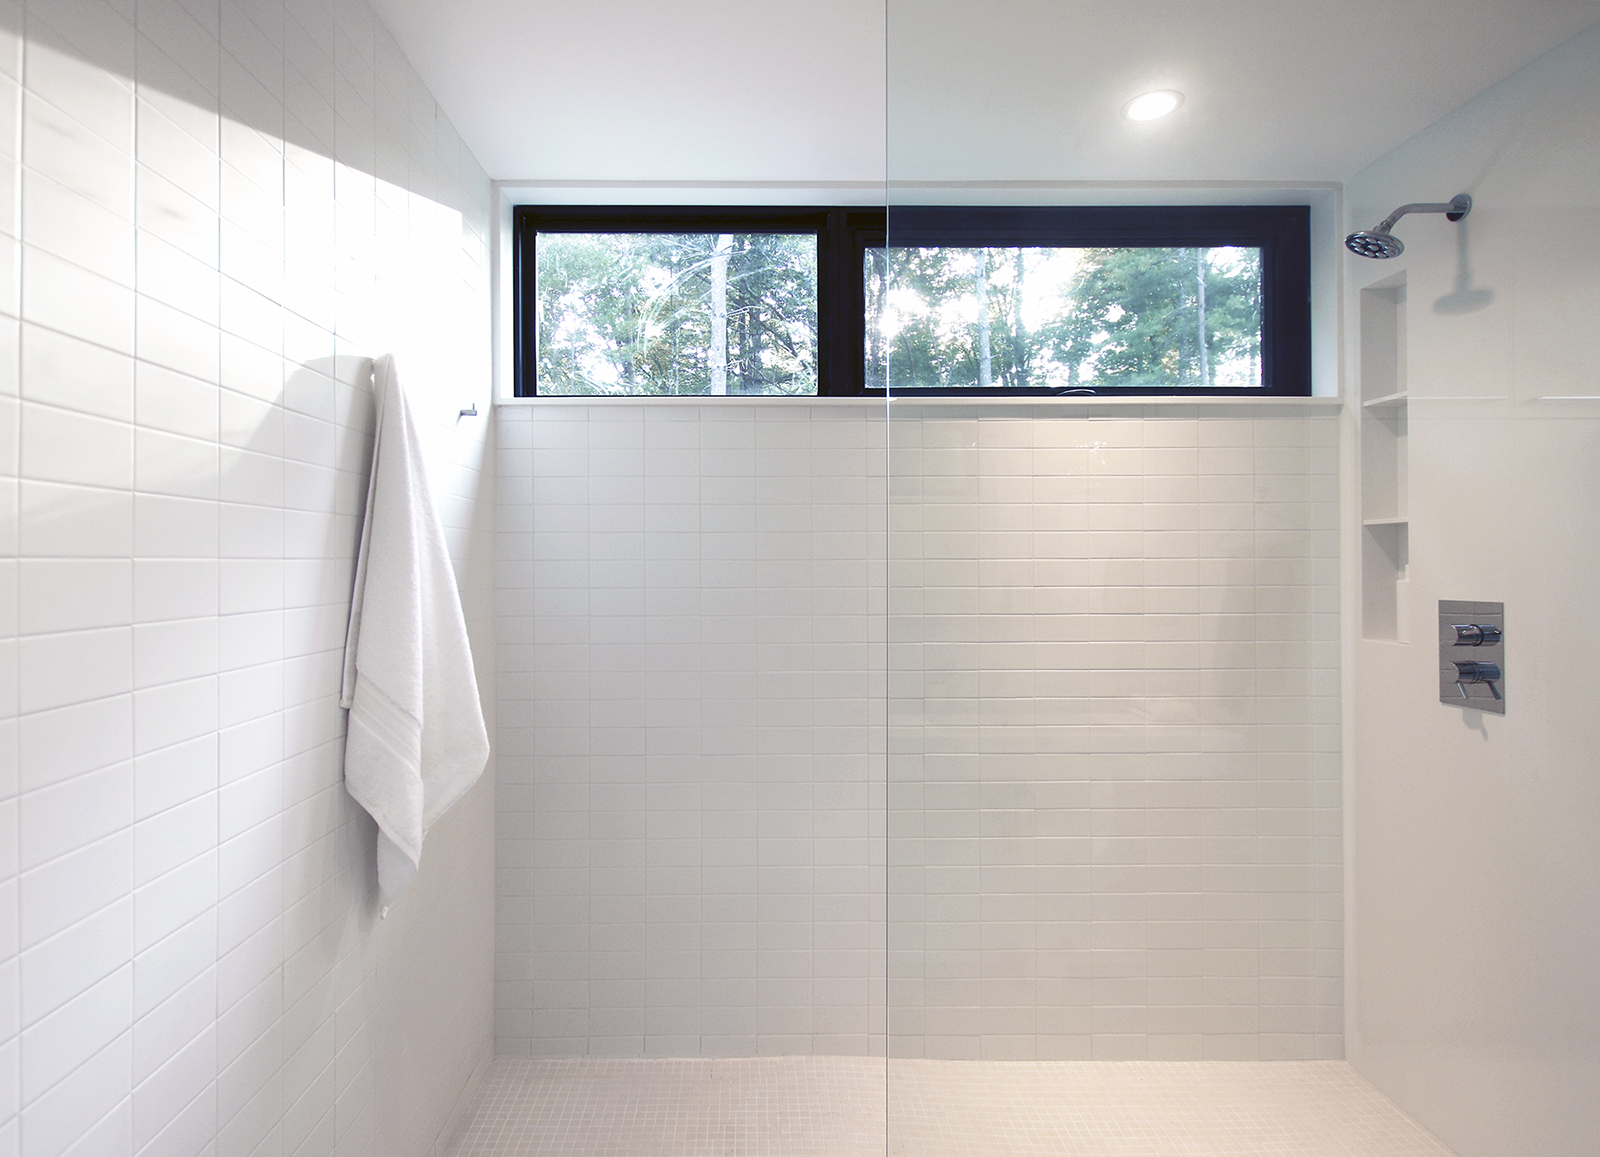 08-res4-resolution-4-architecture-modern-modular-prefab-home-cornwall-cabin-interior-bathroom-shower.jpg